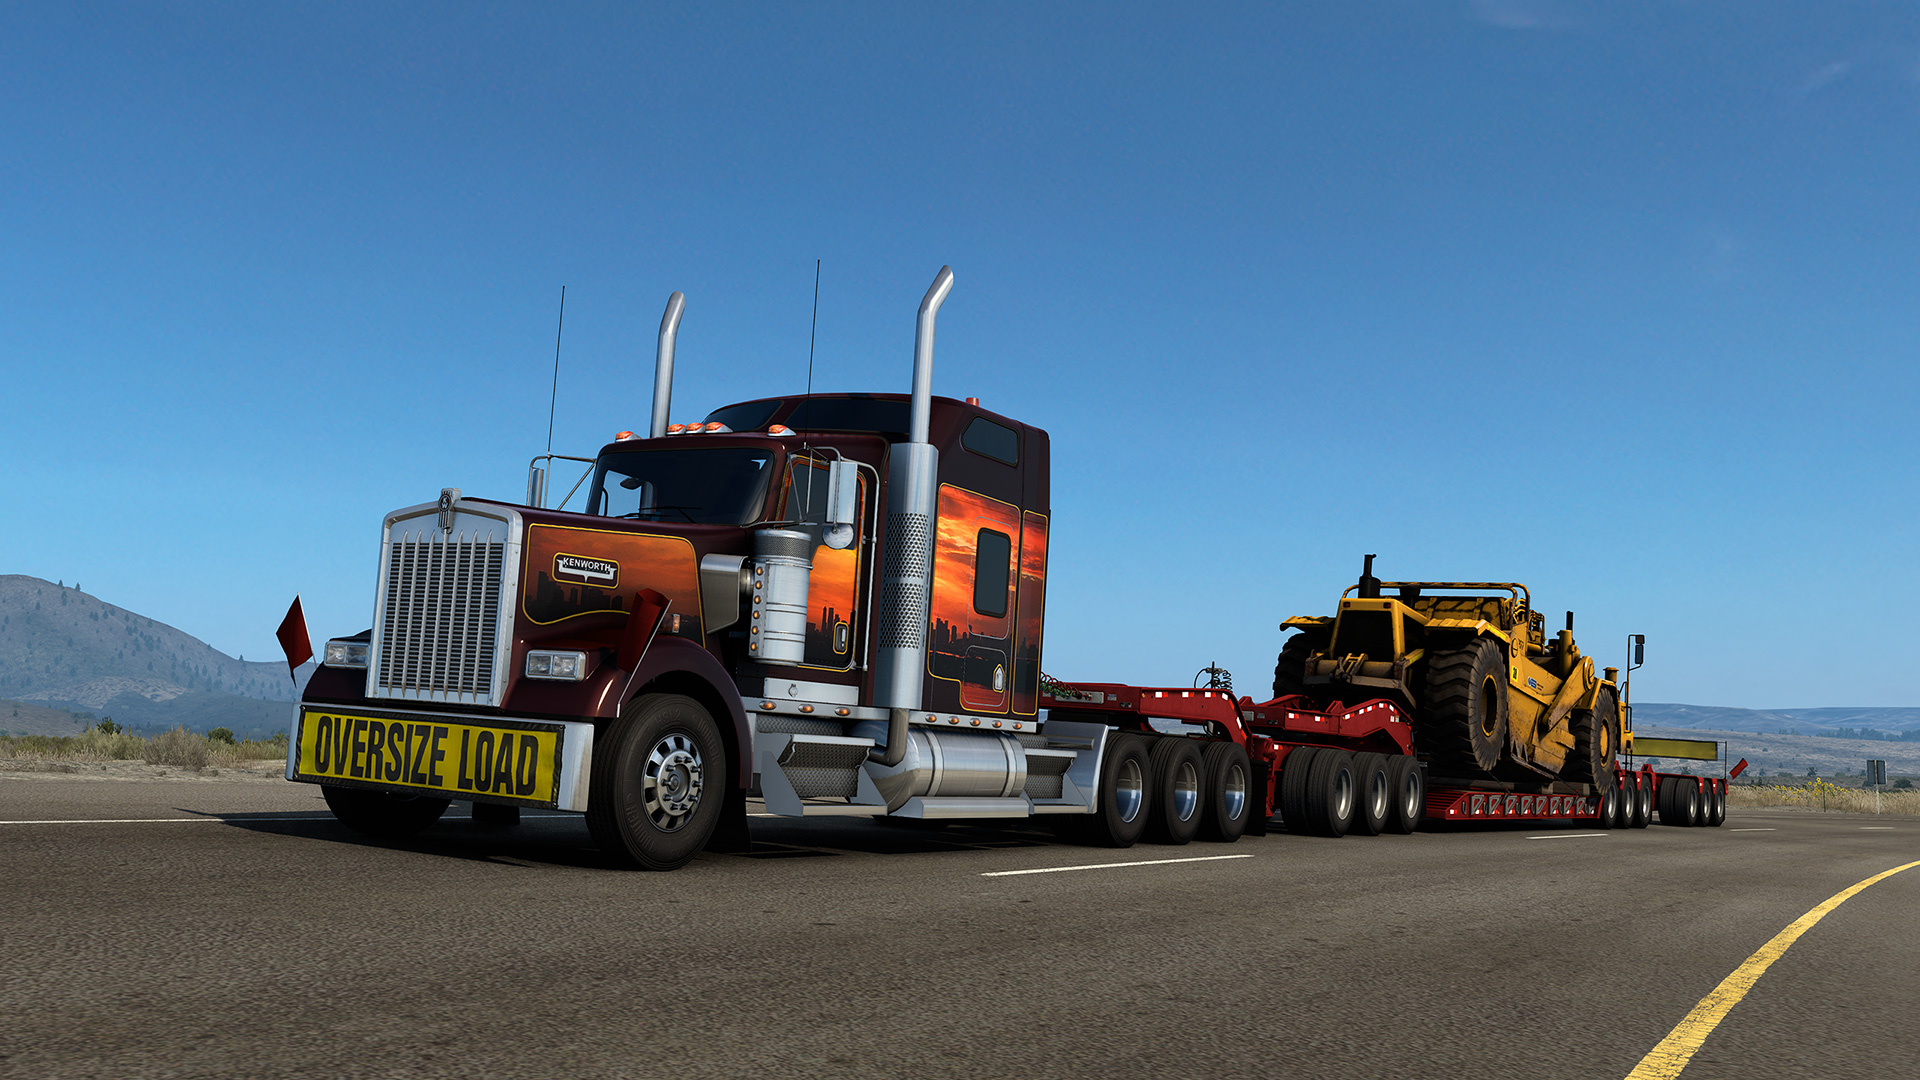 scs-software-s-blog-american-truck-simulator-1-40-open-beta